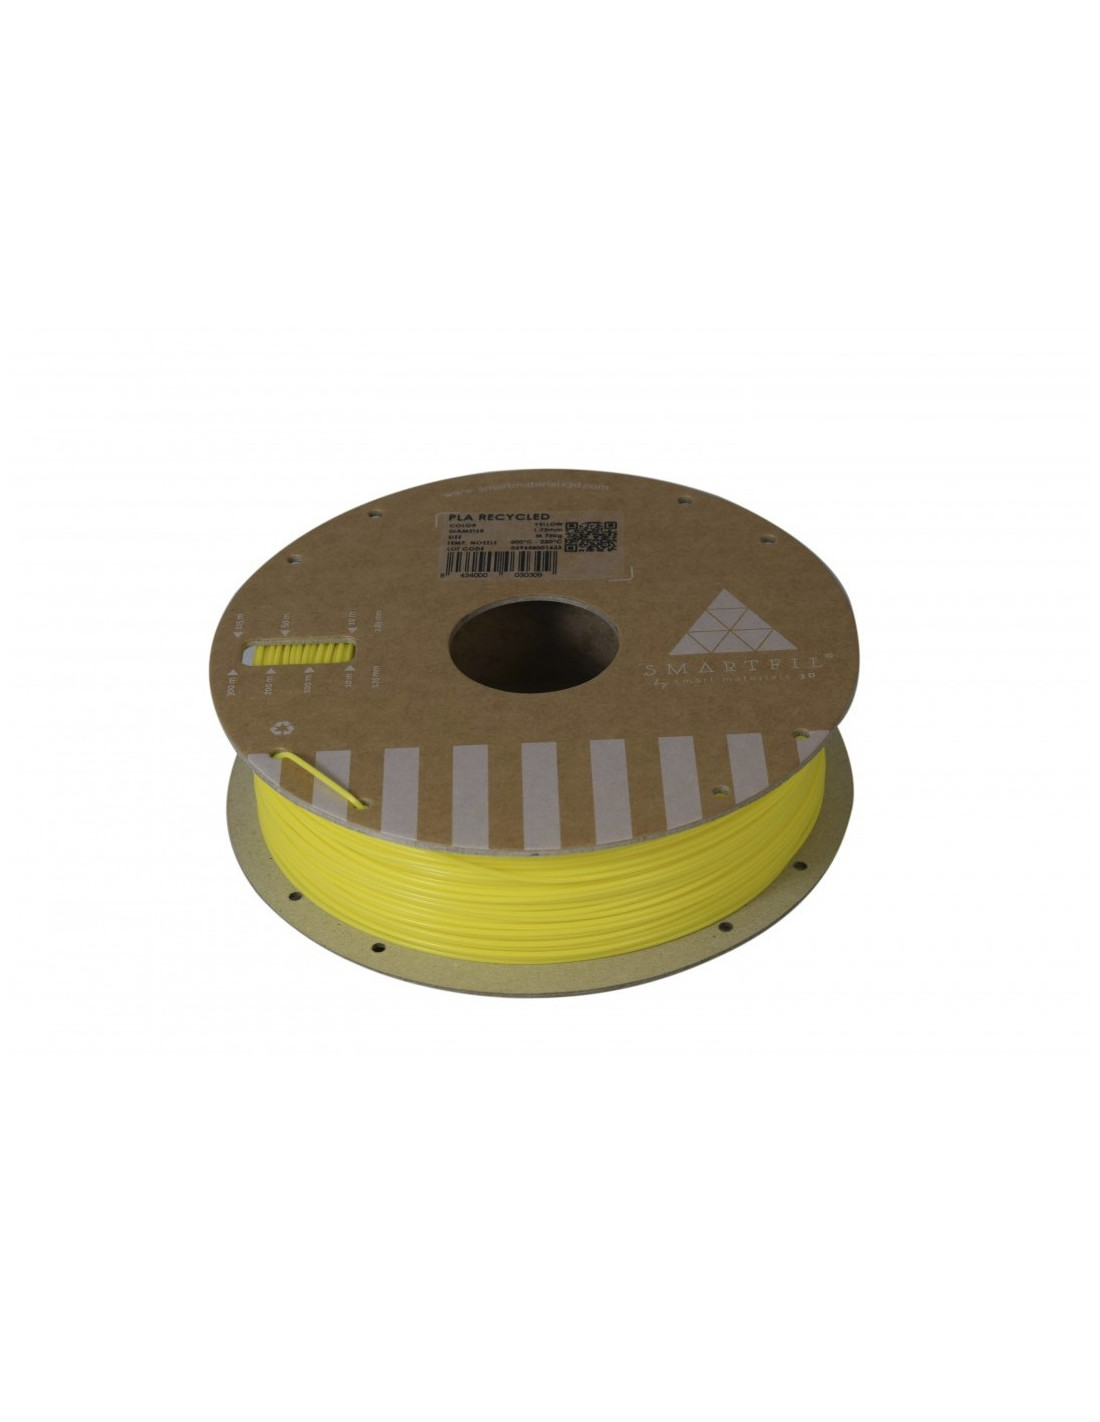 Filamento PLA Reciclado de Smartfil 1,75 mm (0,75Kg) - Yellow